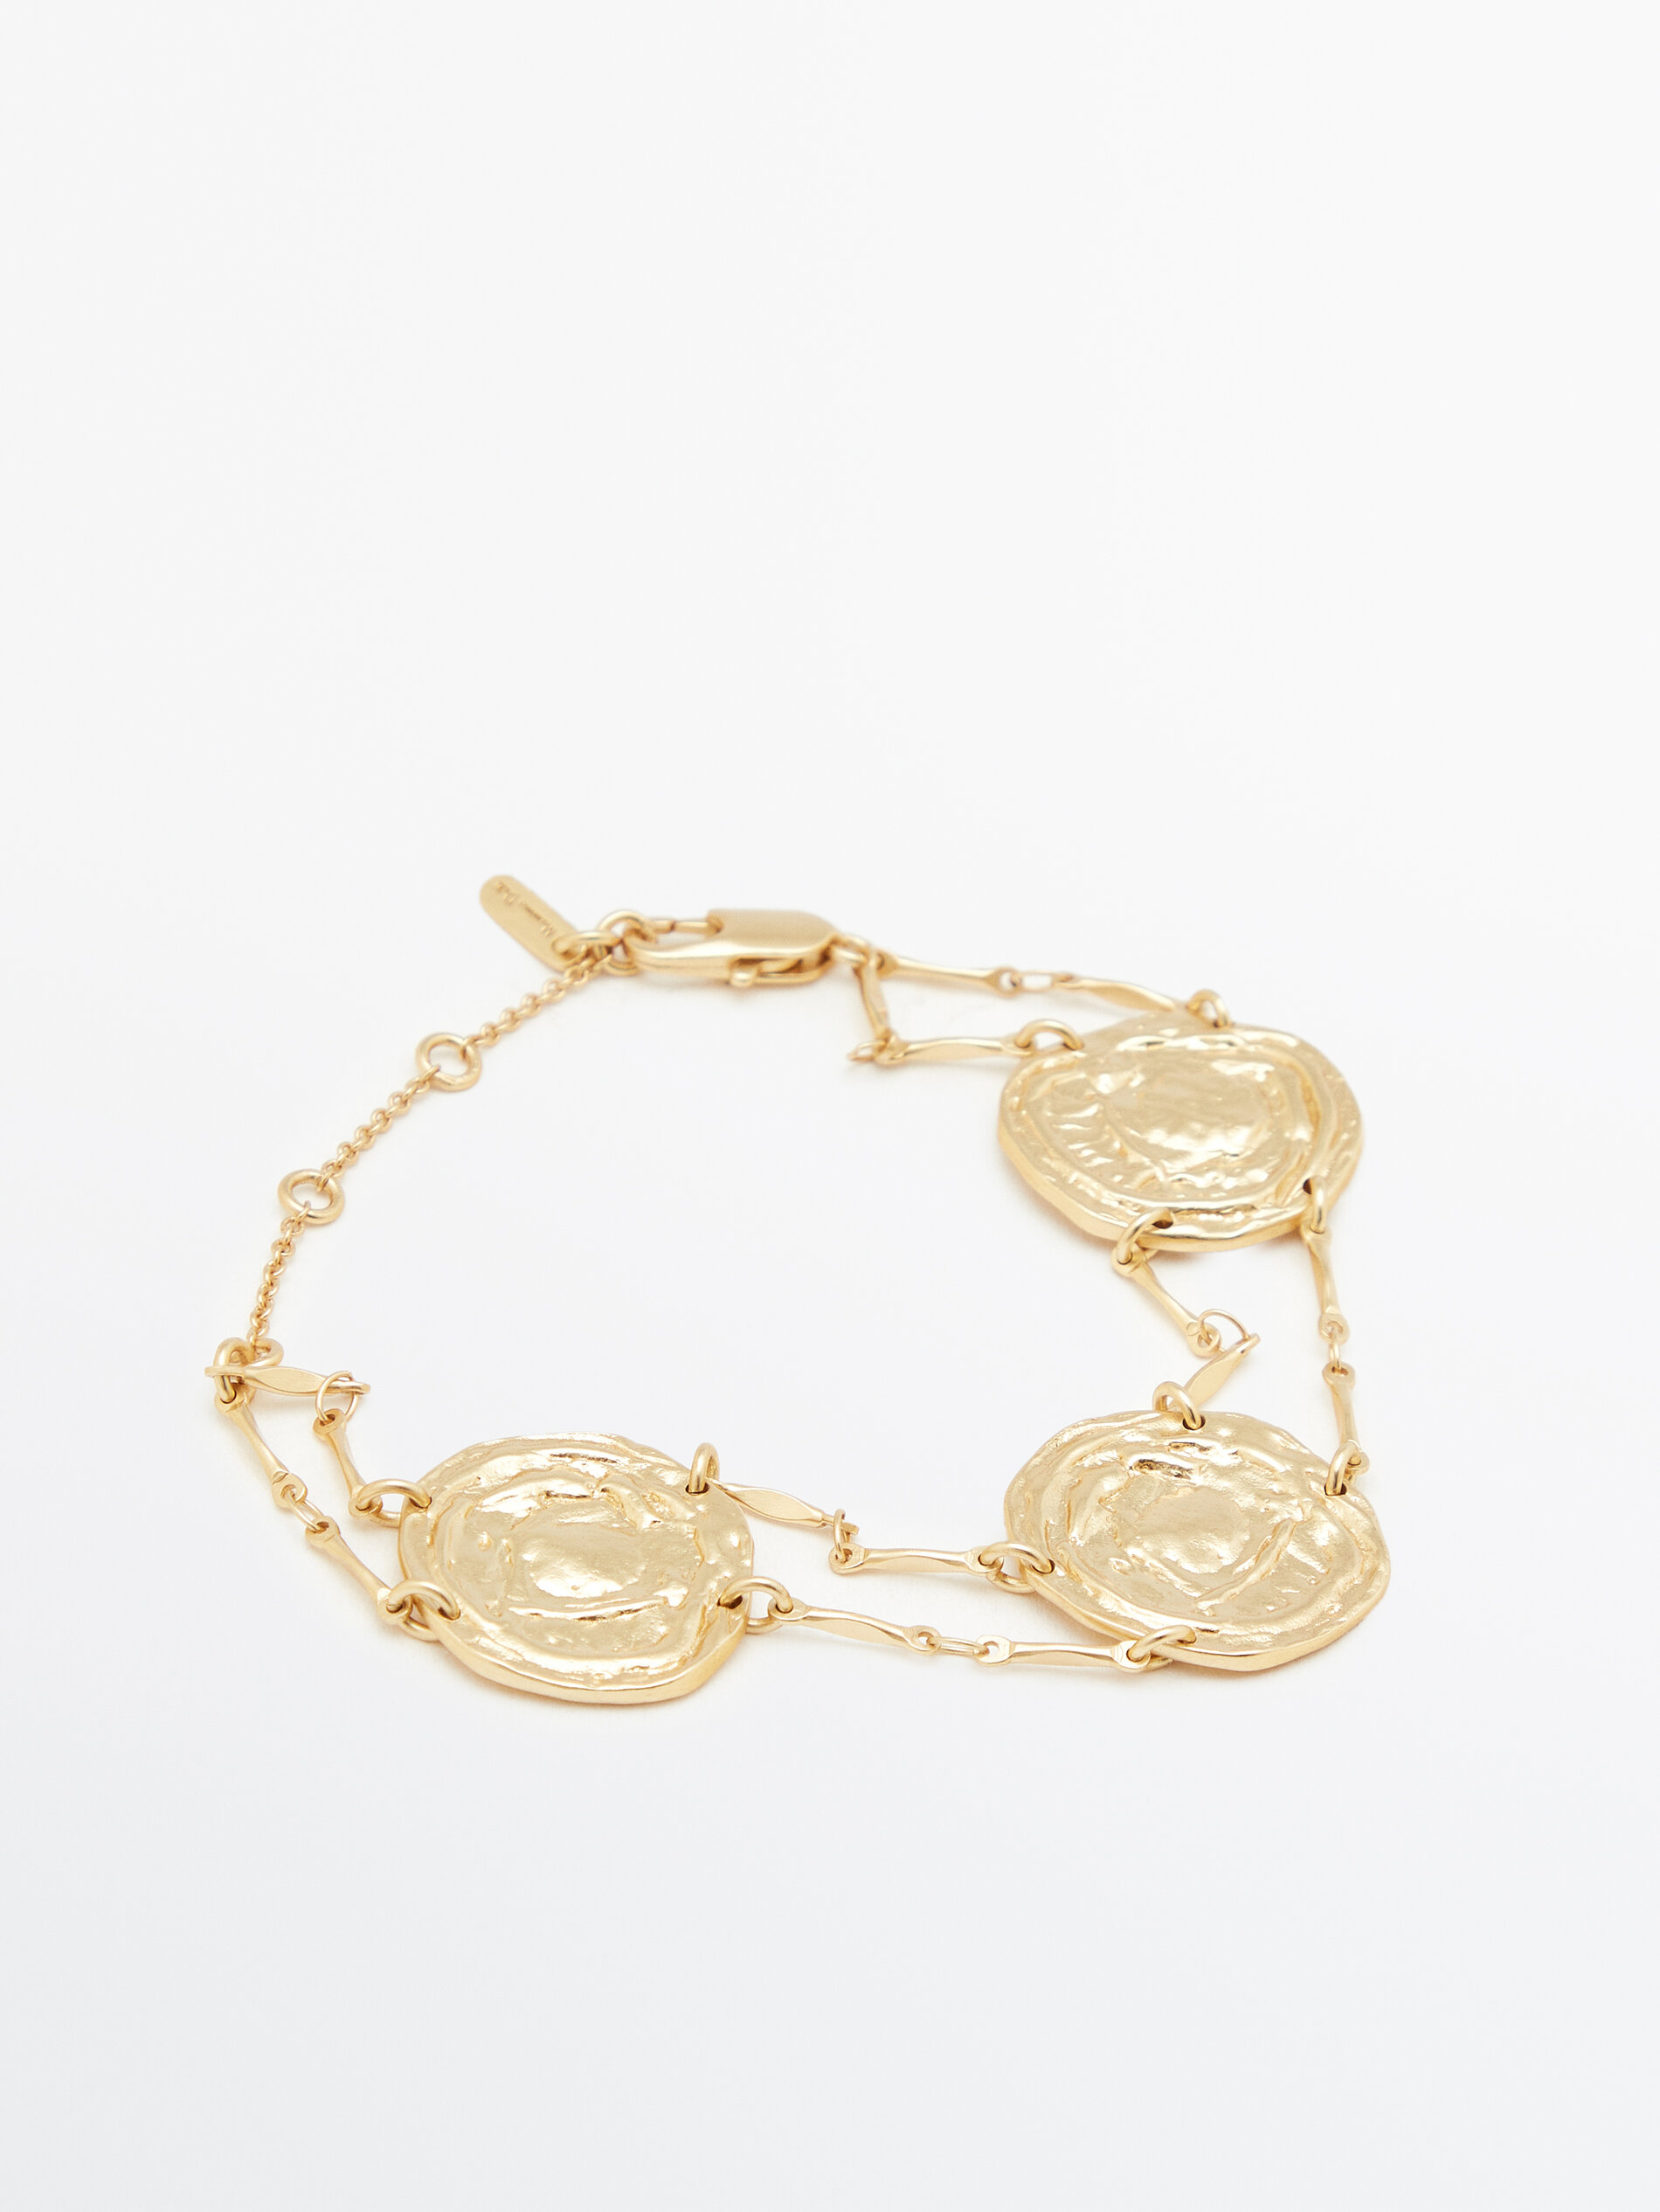 21K Fancy Gold Coin Bracelet - BrLa15463 - 21K Yellow Gold ladies bracelet  teemed together with coins in shine finish. Hook Type: Lobster